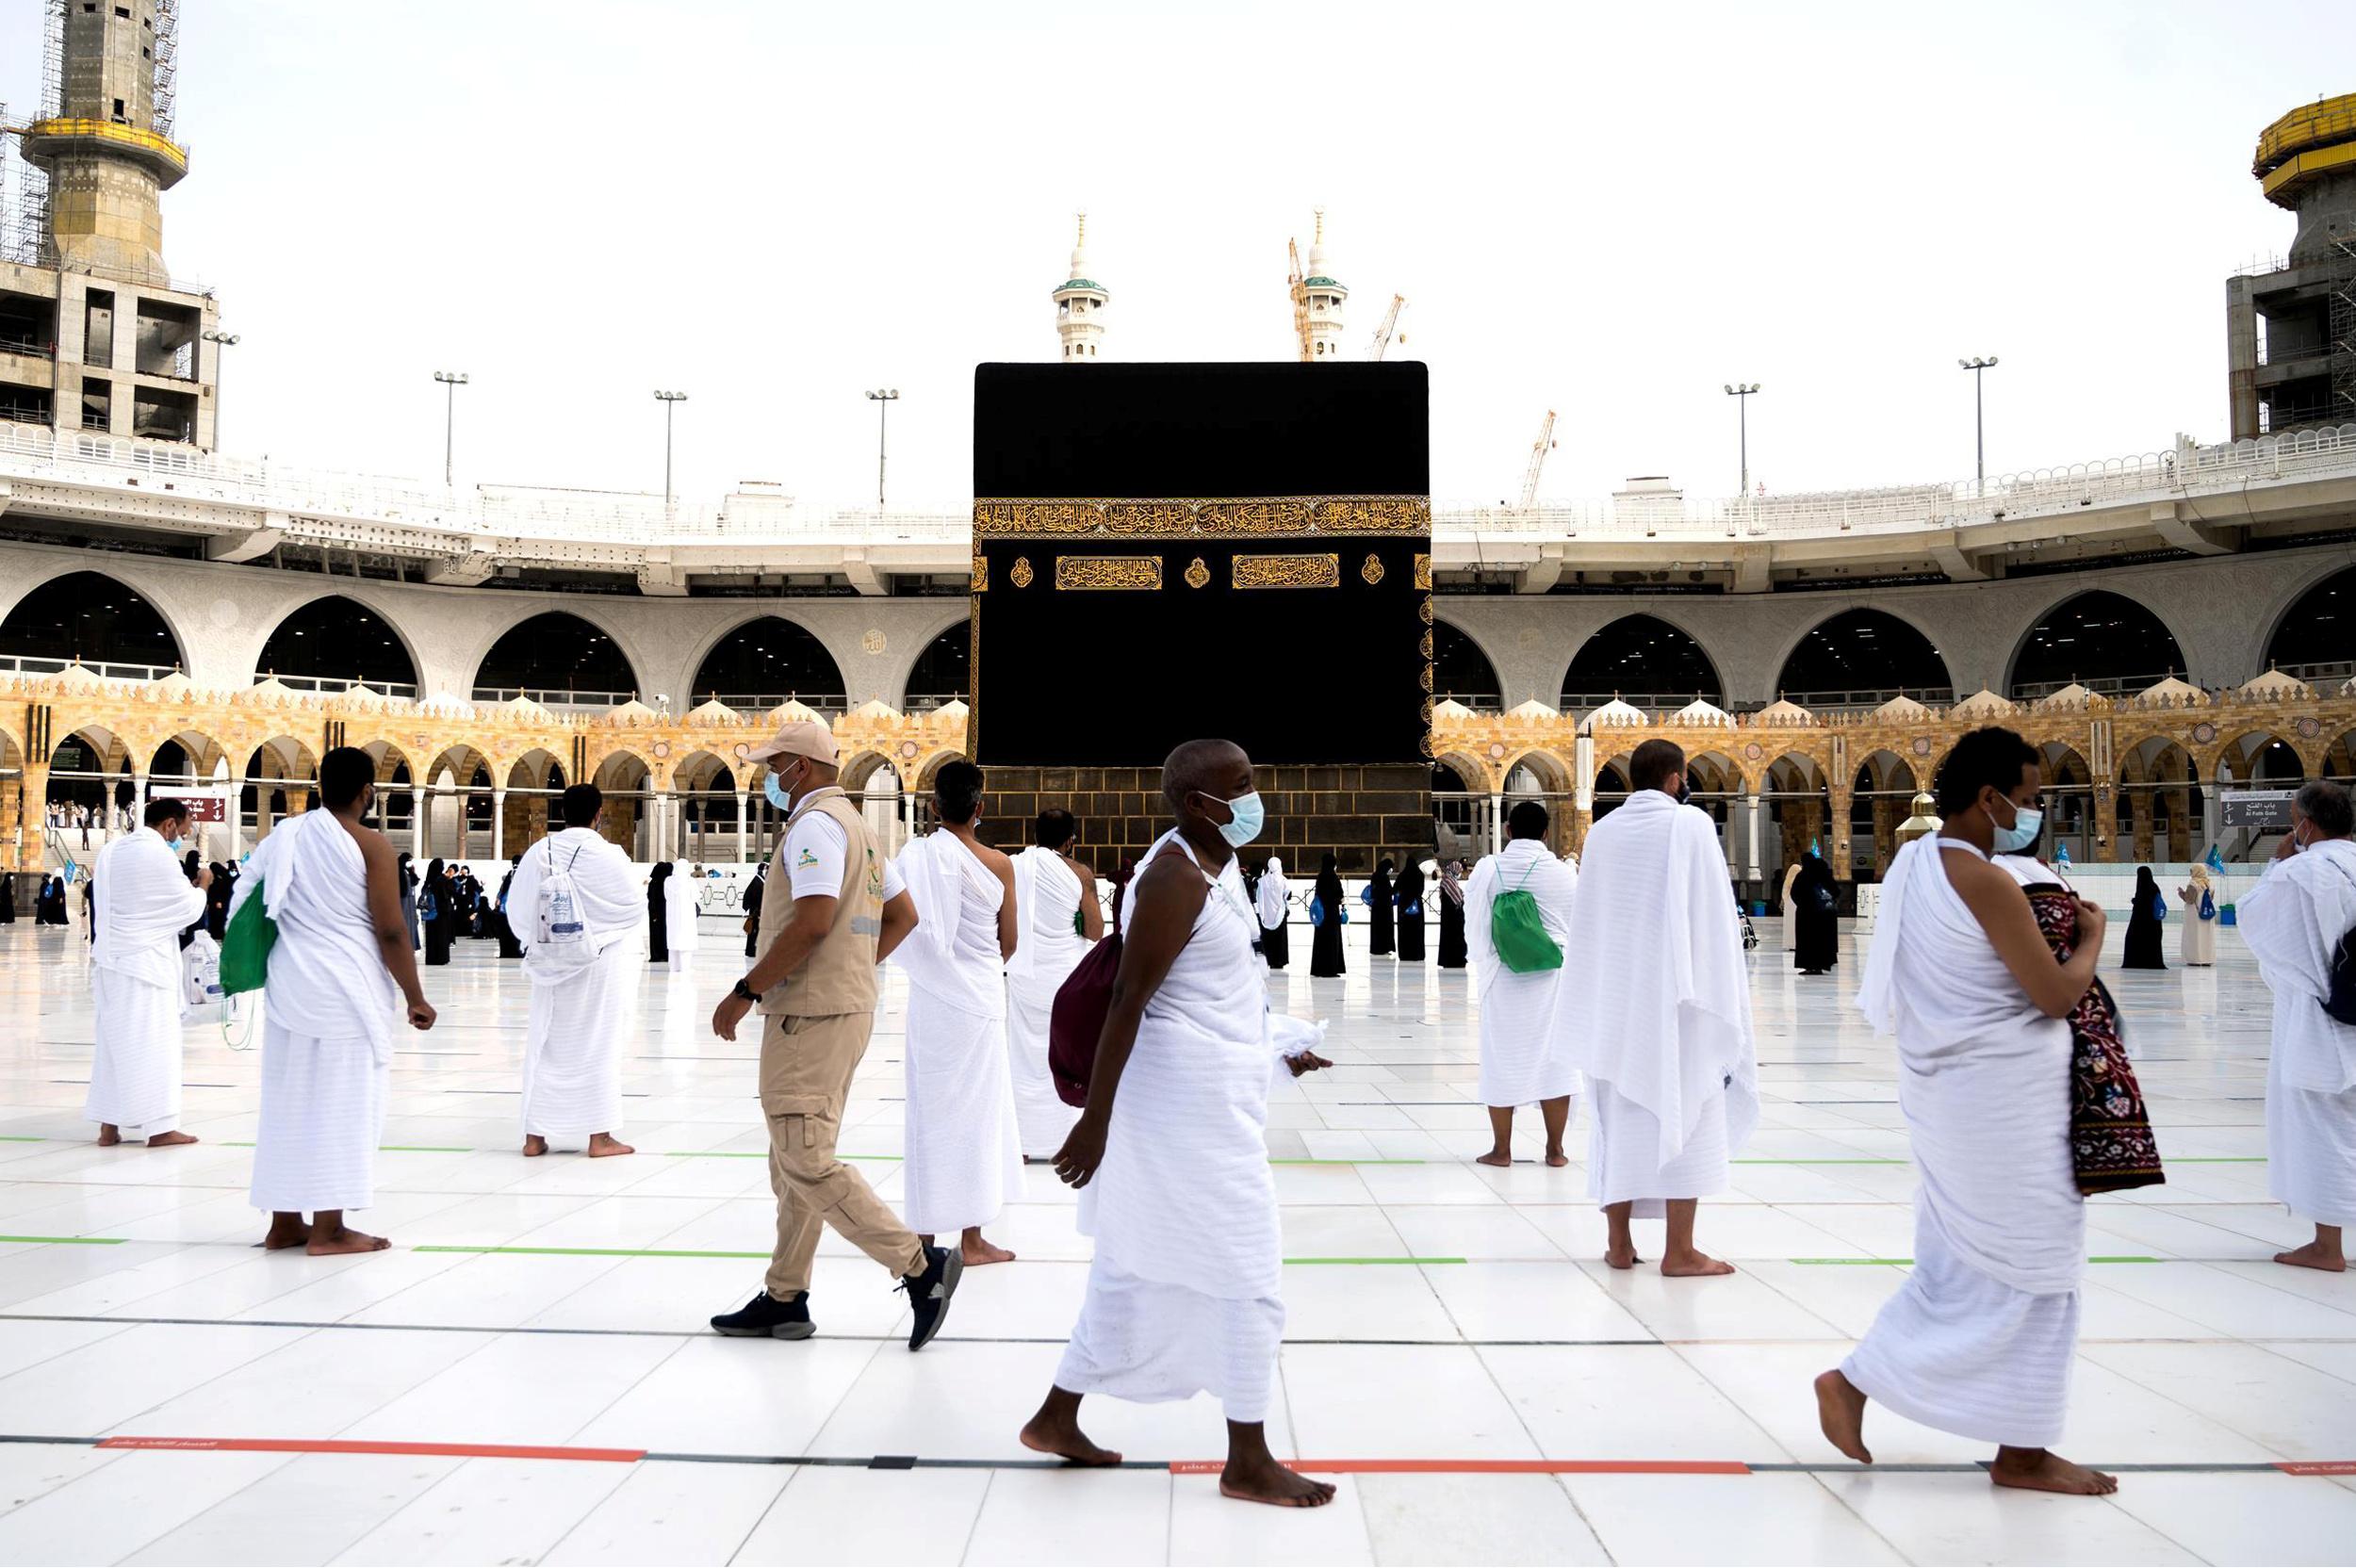 Muslim pilgrim wearing face masks and keeping social distance perform Tawaf around Kaaba during the annual Haj pilgrimage amid the coronavirus disease pandemic, in the holy city of Mecca, Saudi Arabia on July 31, 2020.